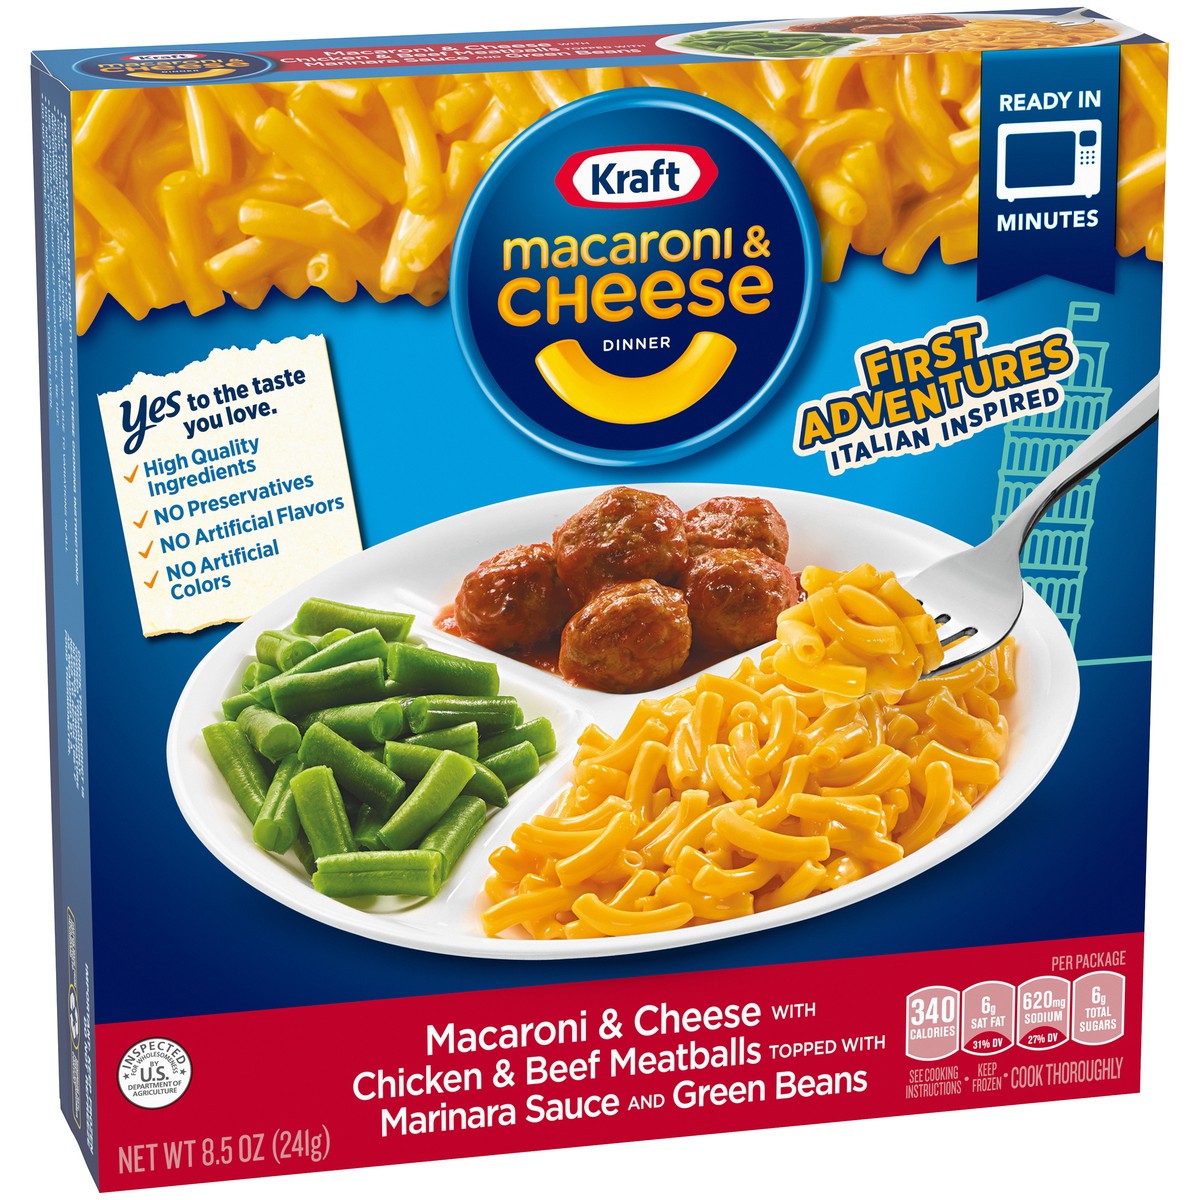 slide 2 of 14, Kraft First Adventures Italian Inspired Macaroni & Cheese Frozen Dinner with Chicken & Beef Meatballs, Marinara Sauce & Green Beans, 8.5 oz Box, 8.5 oz